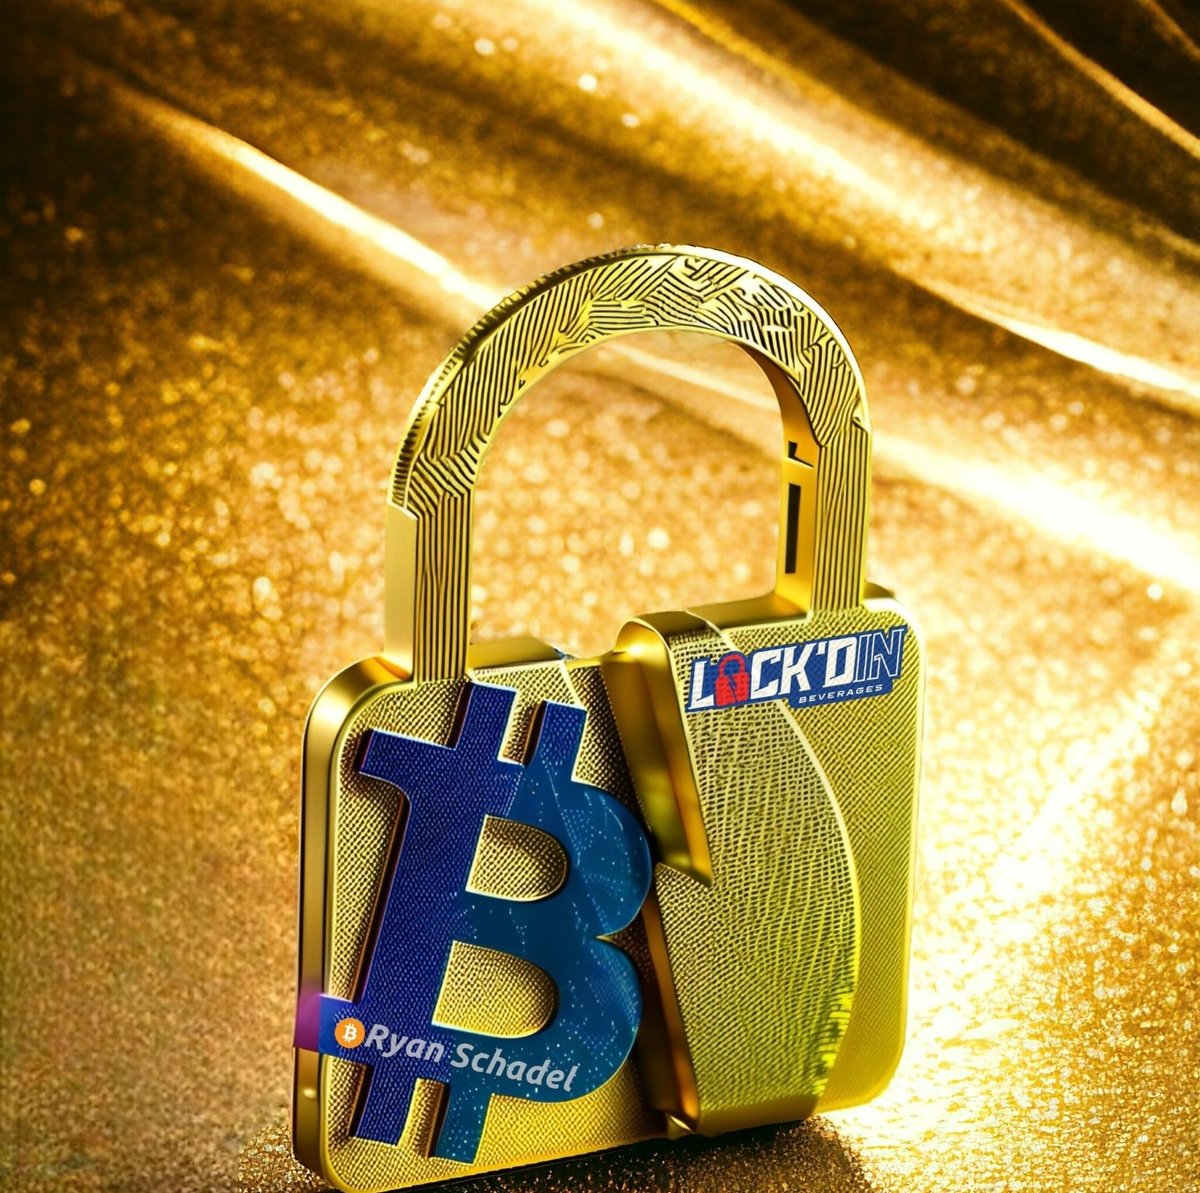 Maybe $LTNC will be #Lockdin with #Bitcoin   . #CryptoNews 

@SenderLabs